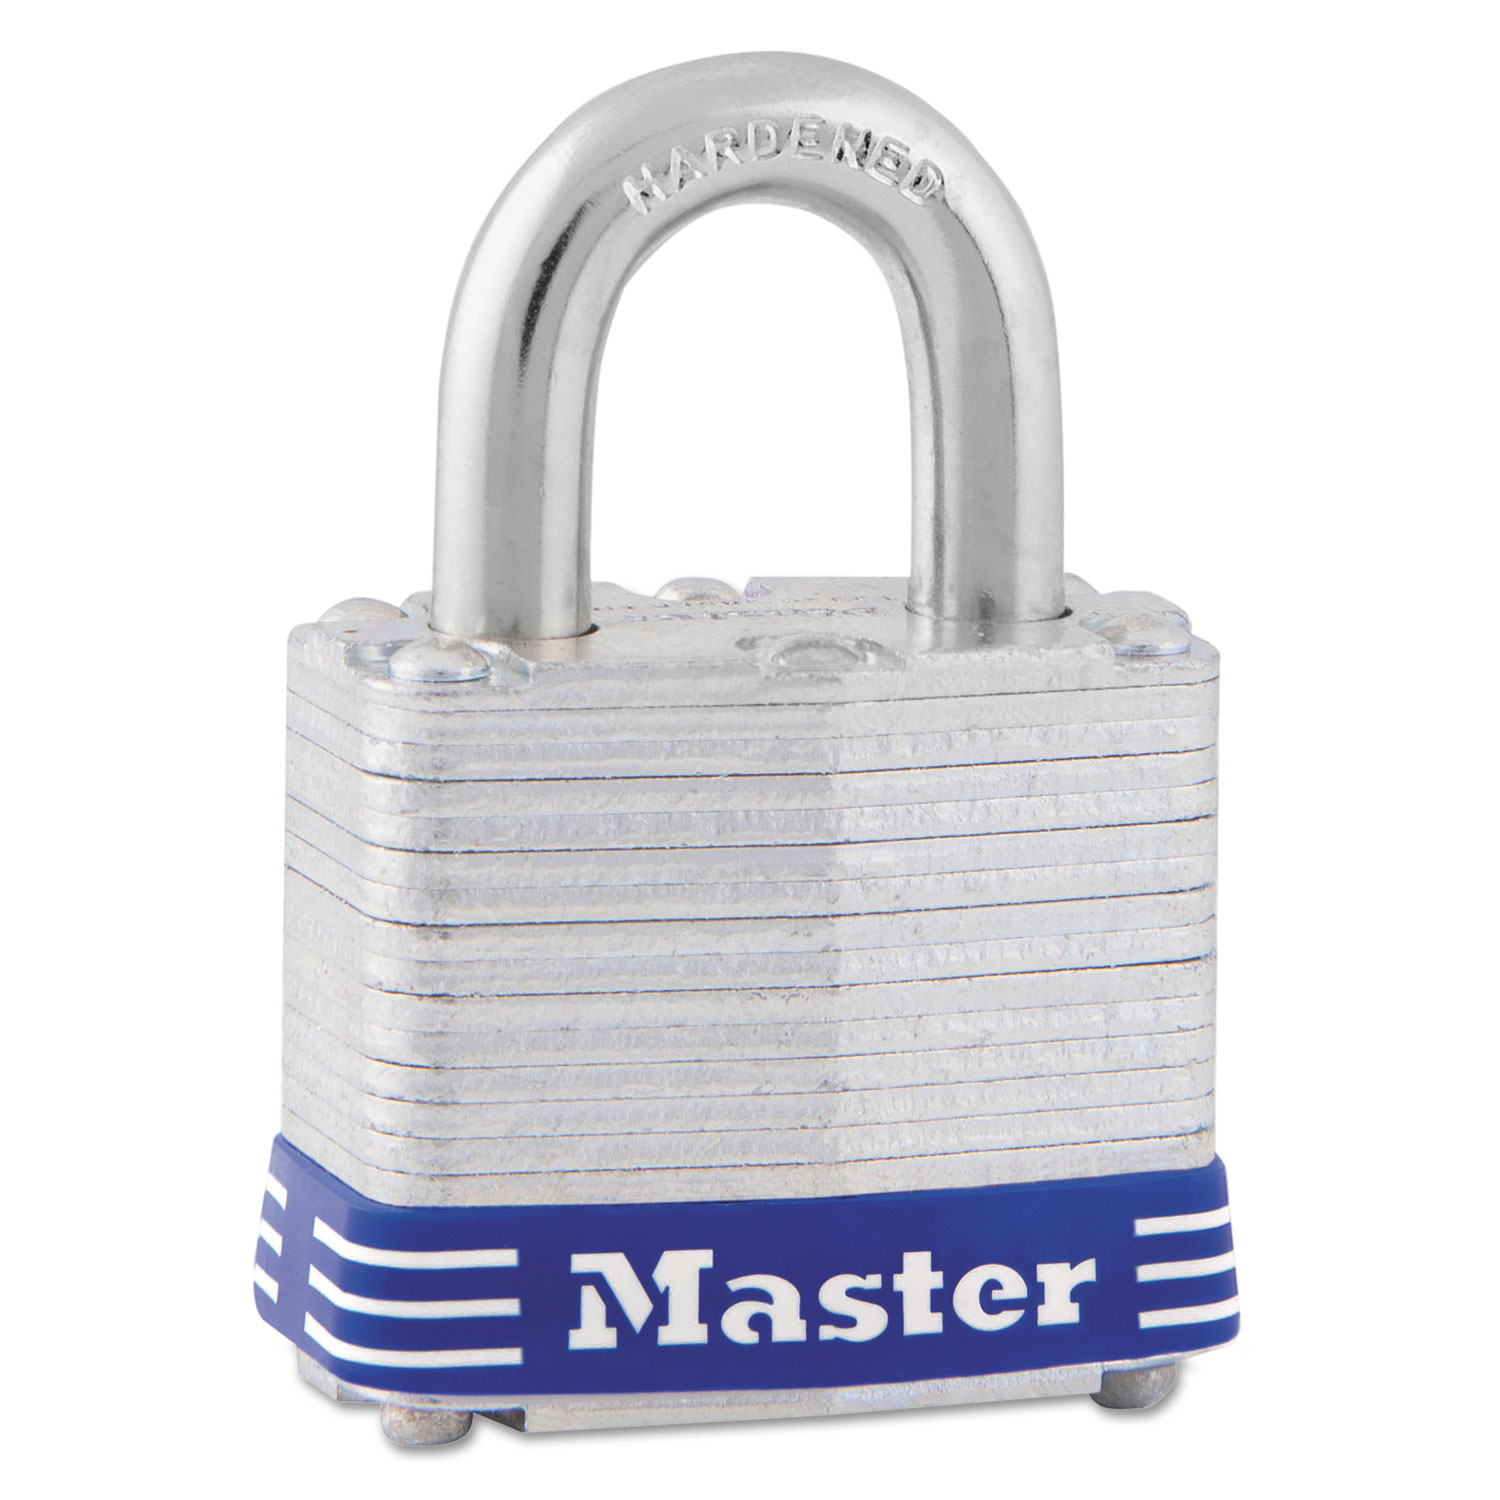  Master Lock 5D Four-Pin Tumbler Laminated Steel Lock, 2 Wide, Silver/Blue, Two Keys (MLK5D) 